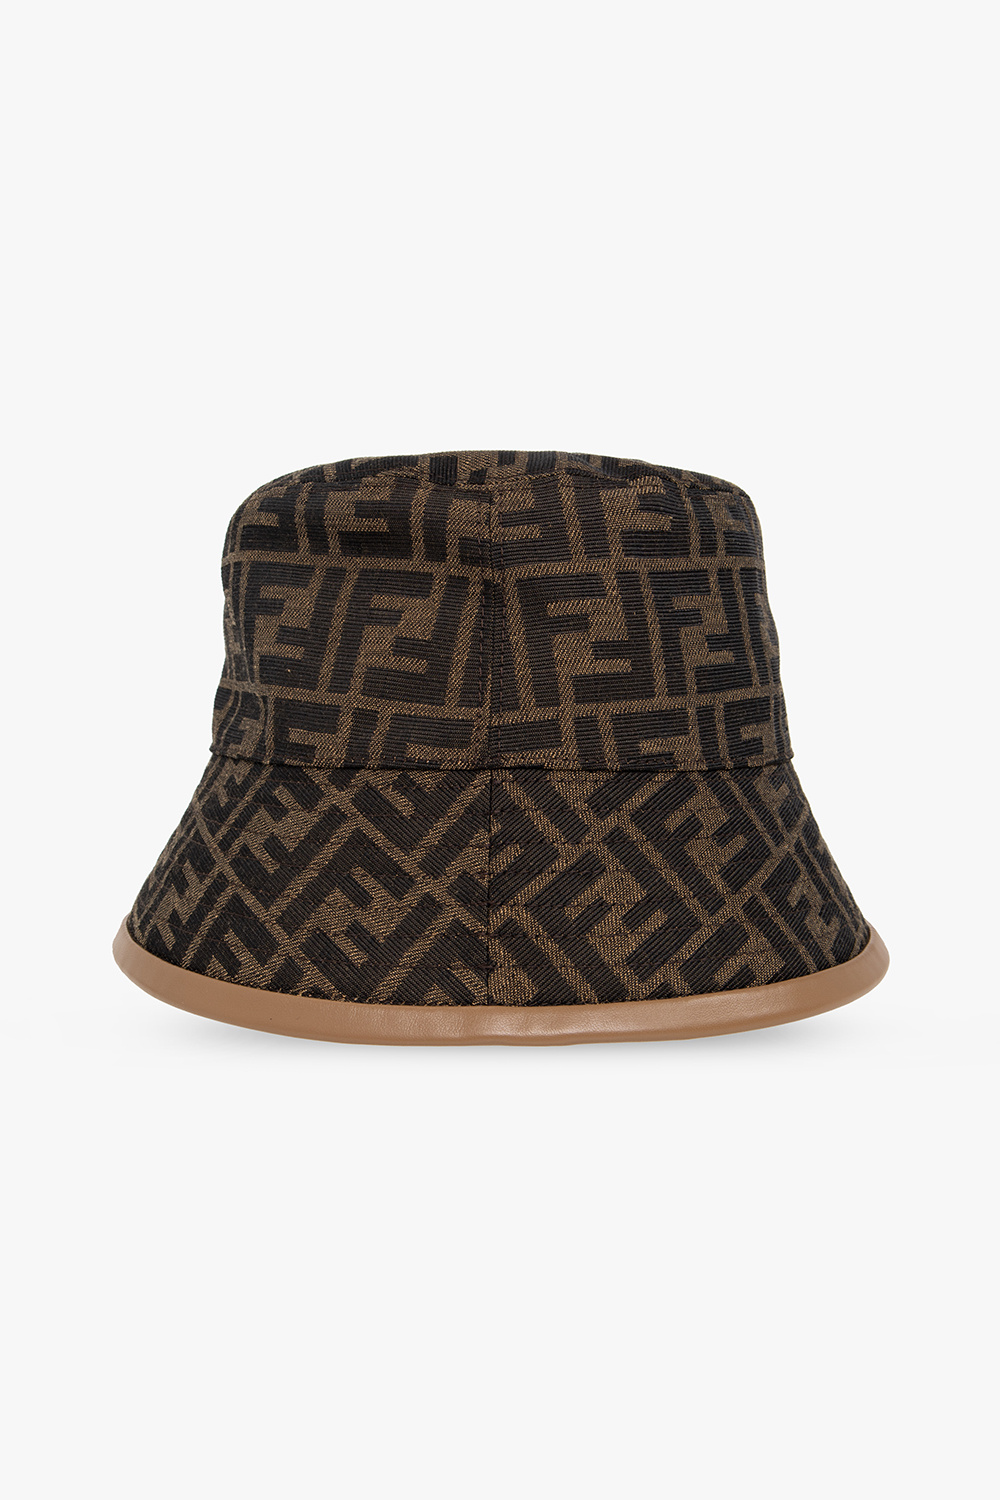 ❤️ CUTIE ❤️ Monogram Mini Boite Chapeau. In very good…